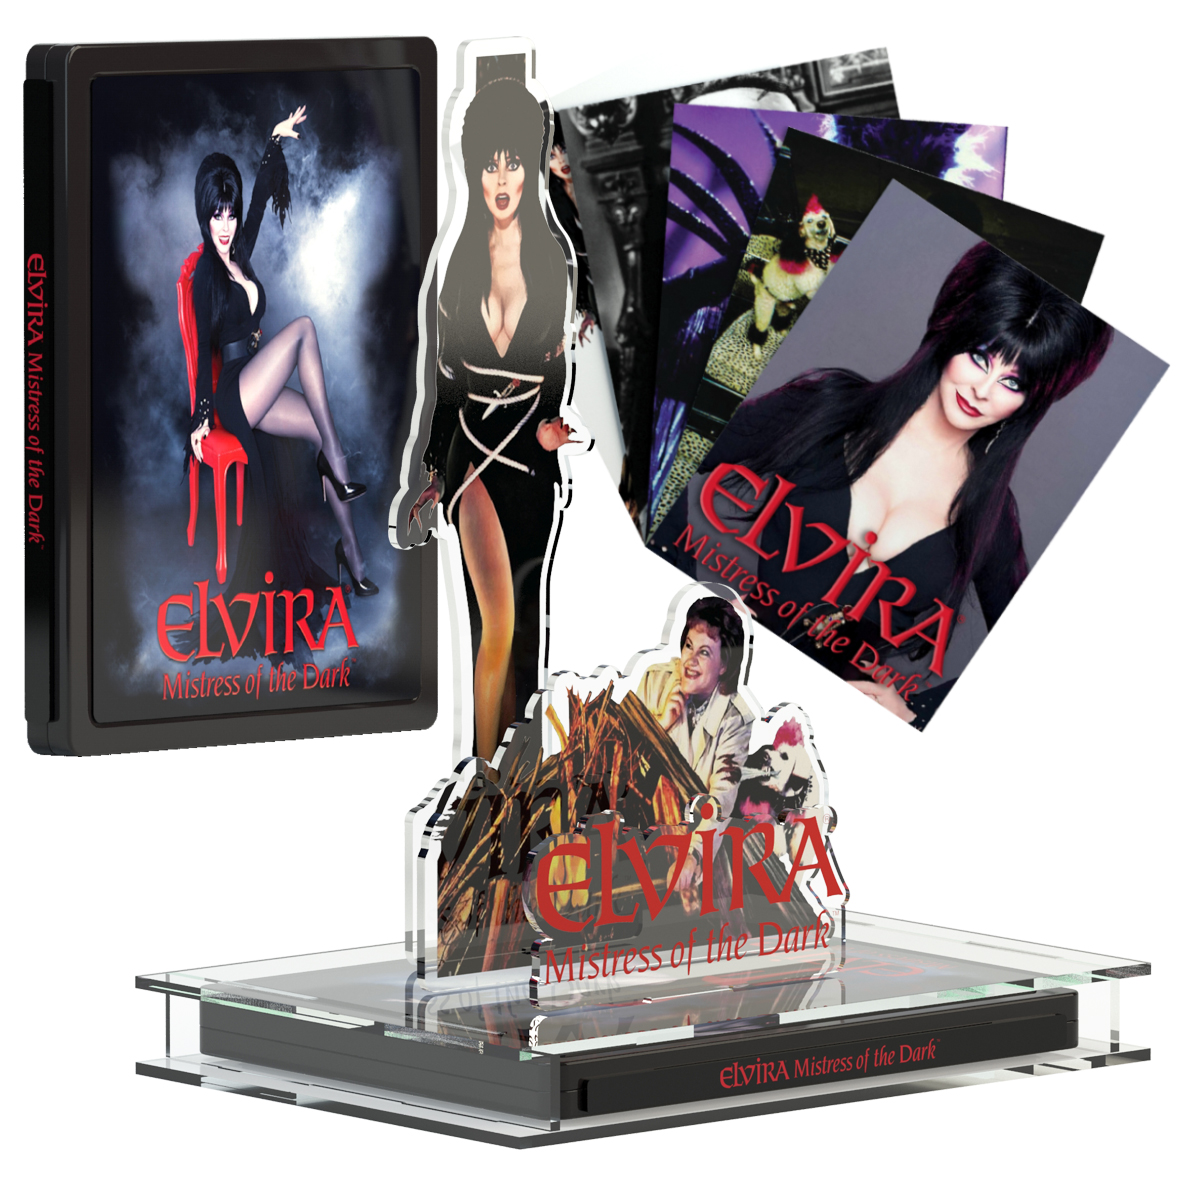 Exclusive Elvira in Coffin Premium Format Figure